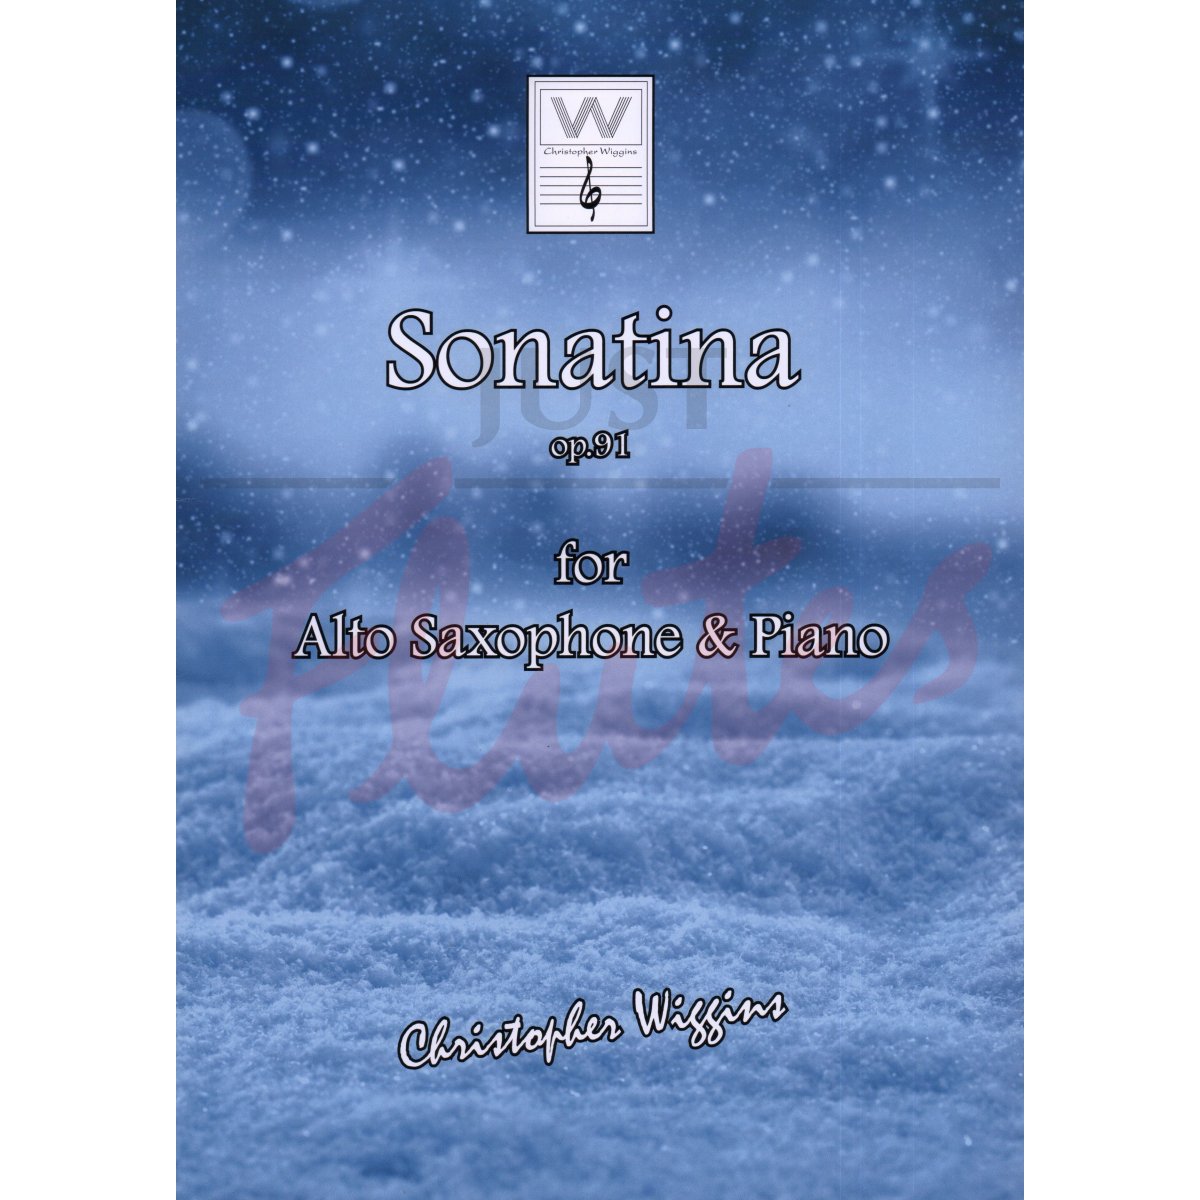 Sonatina for Alto Saxophone and Piano